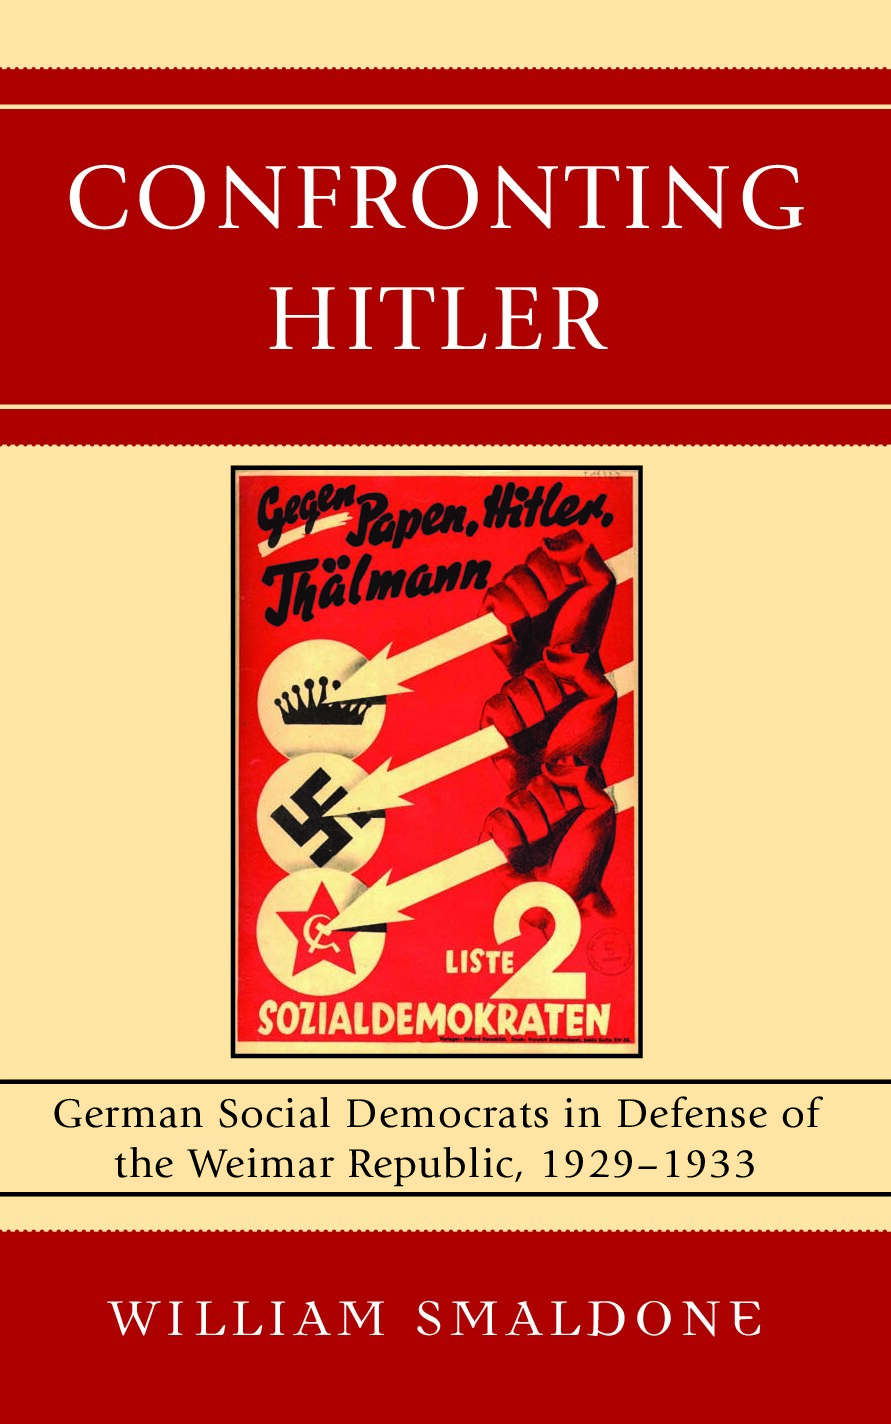 Confronting Hitler : German Social Democrats in Defense of the Weimar Republic, 1929-1933